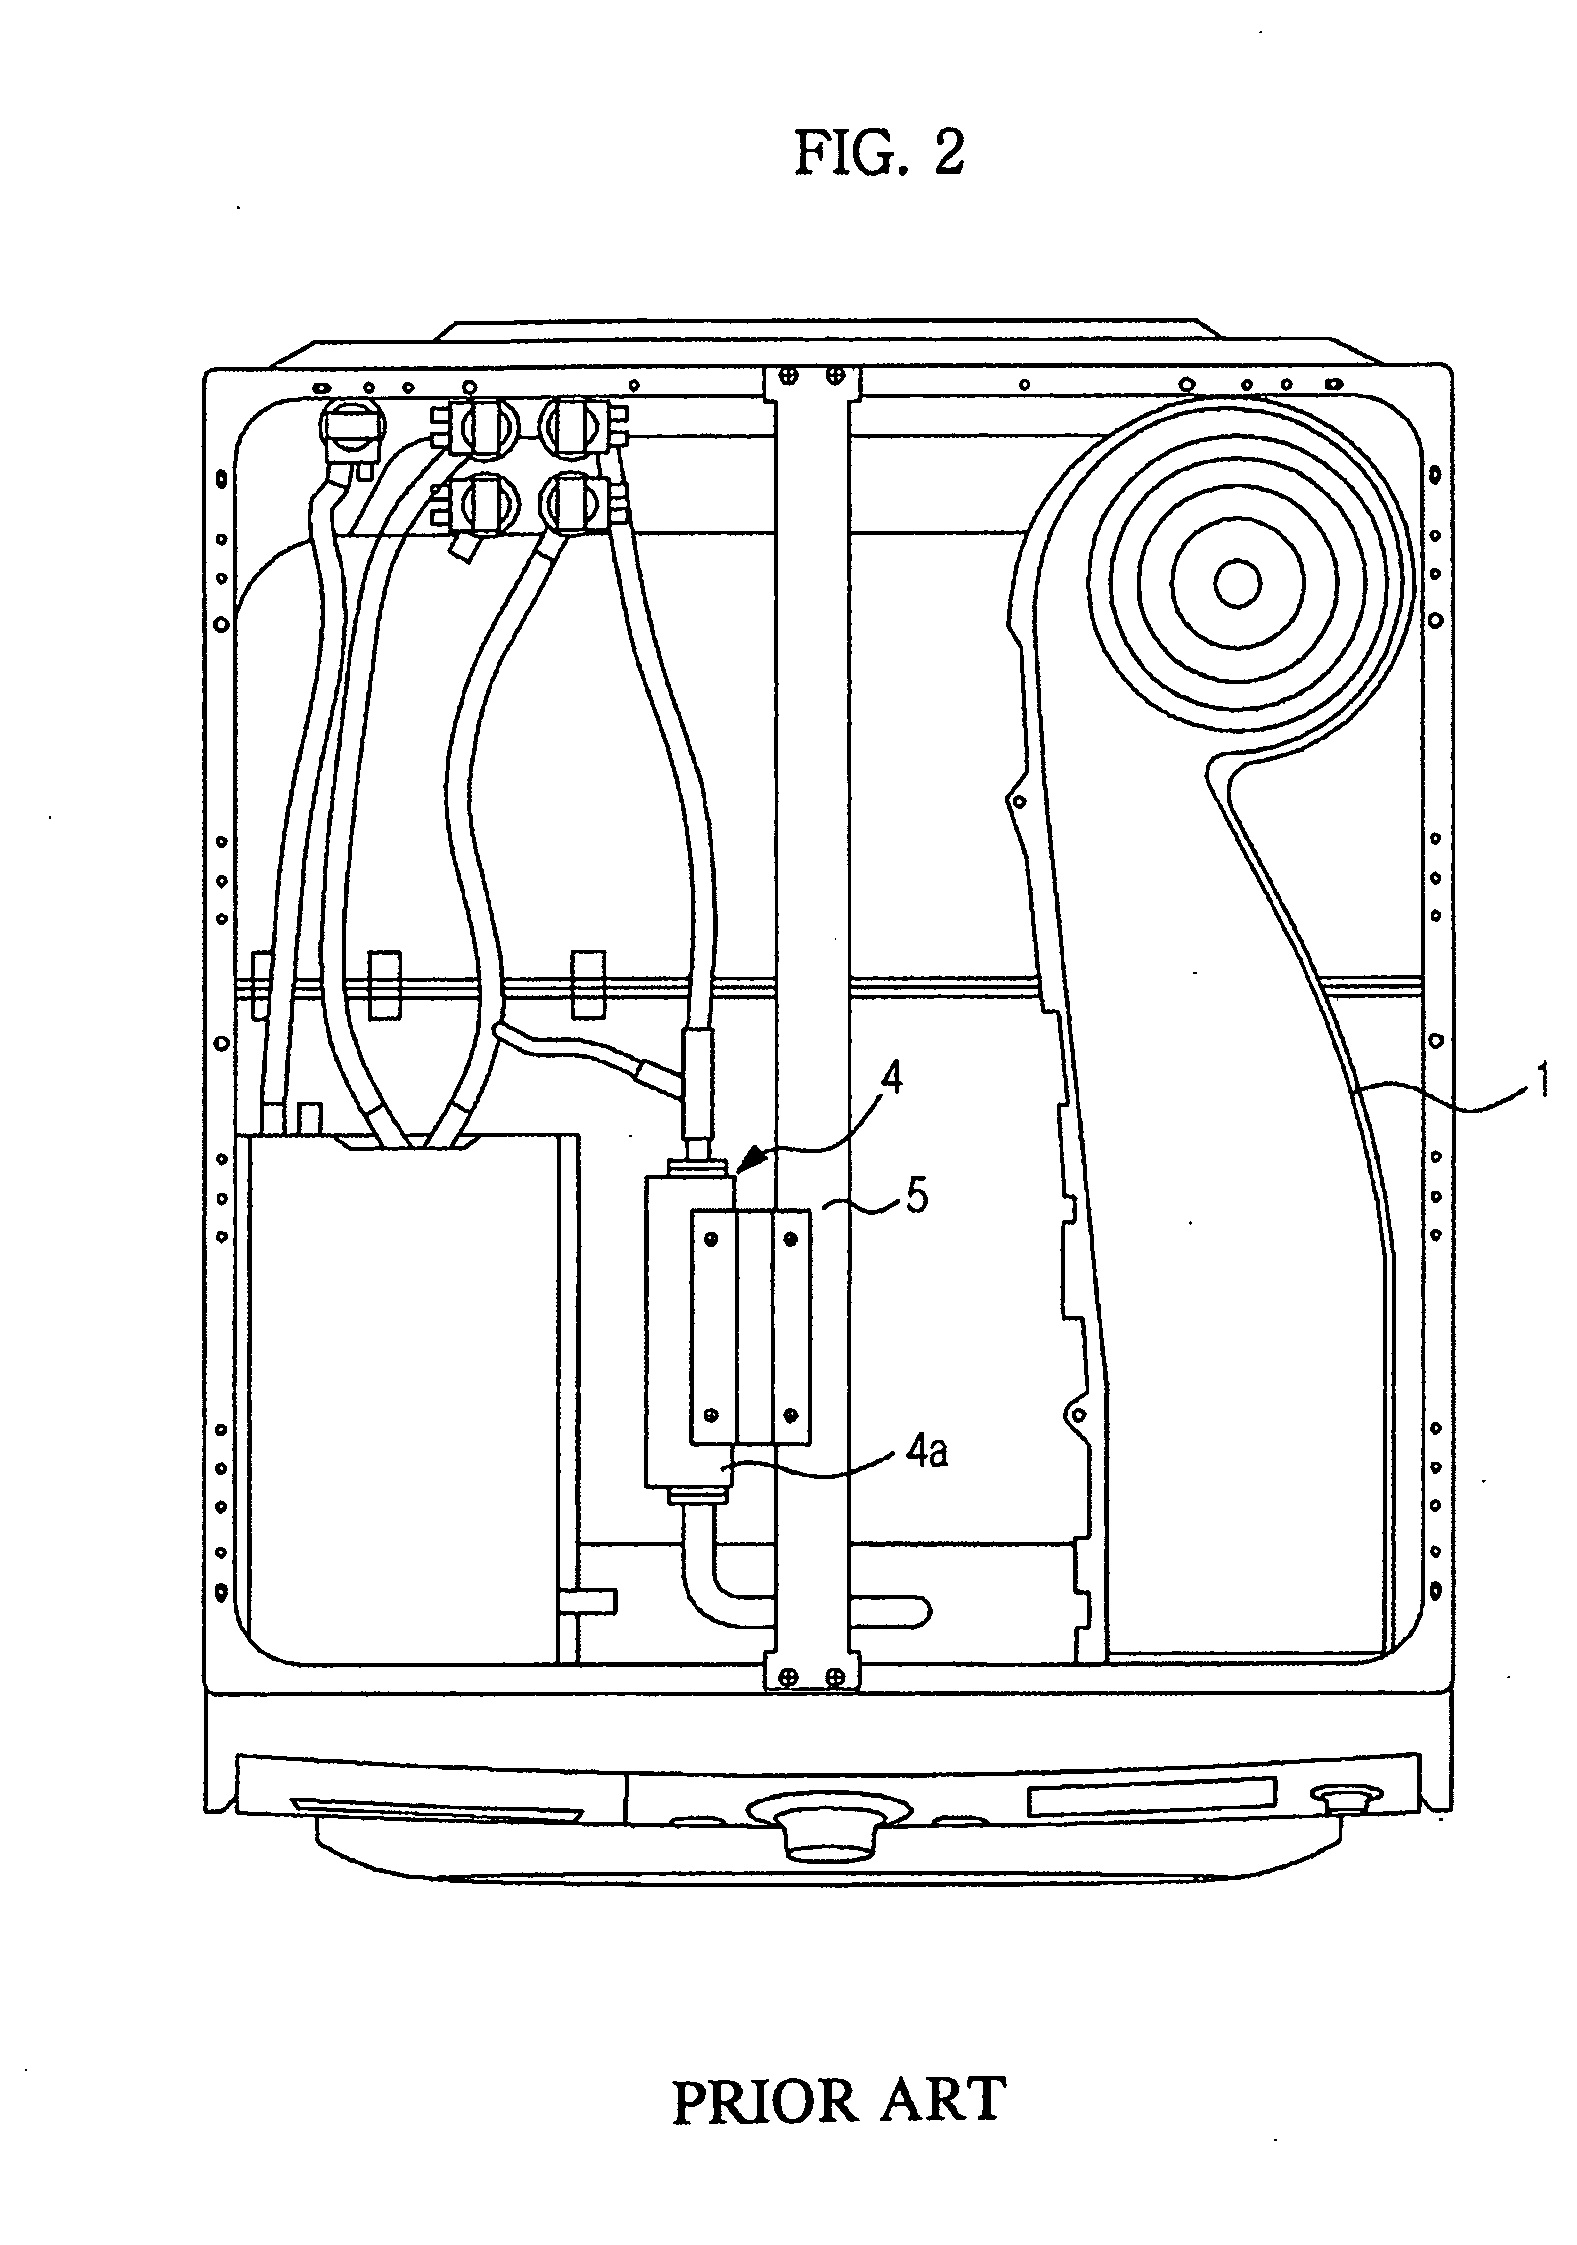 Washing machine with steam generator